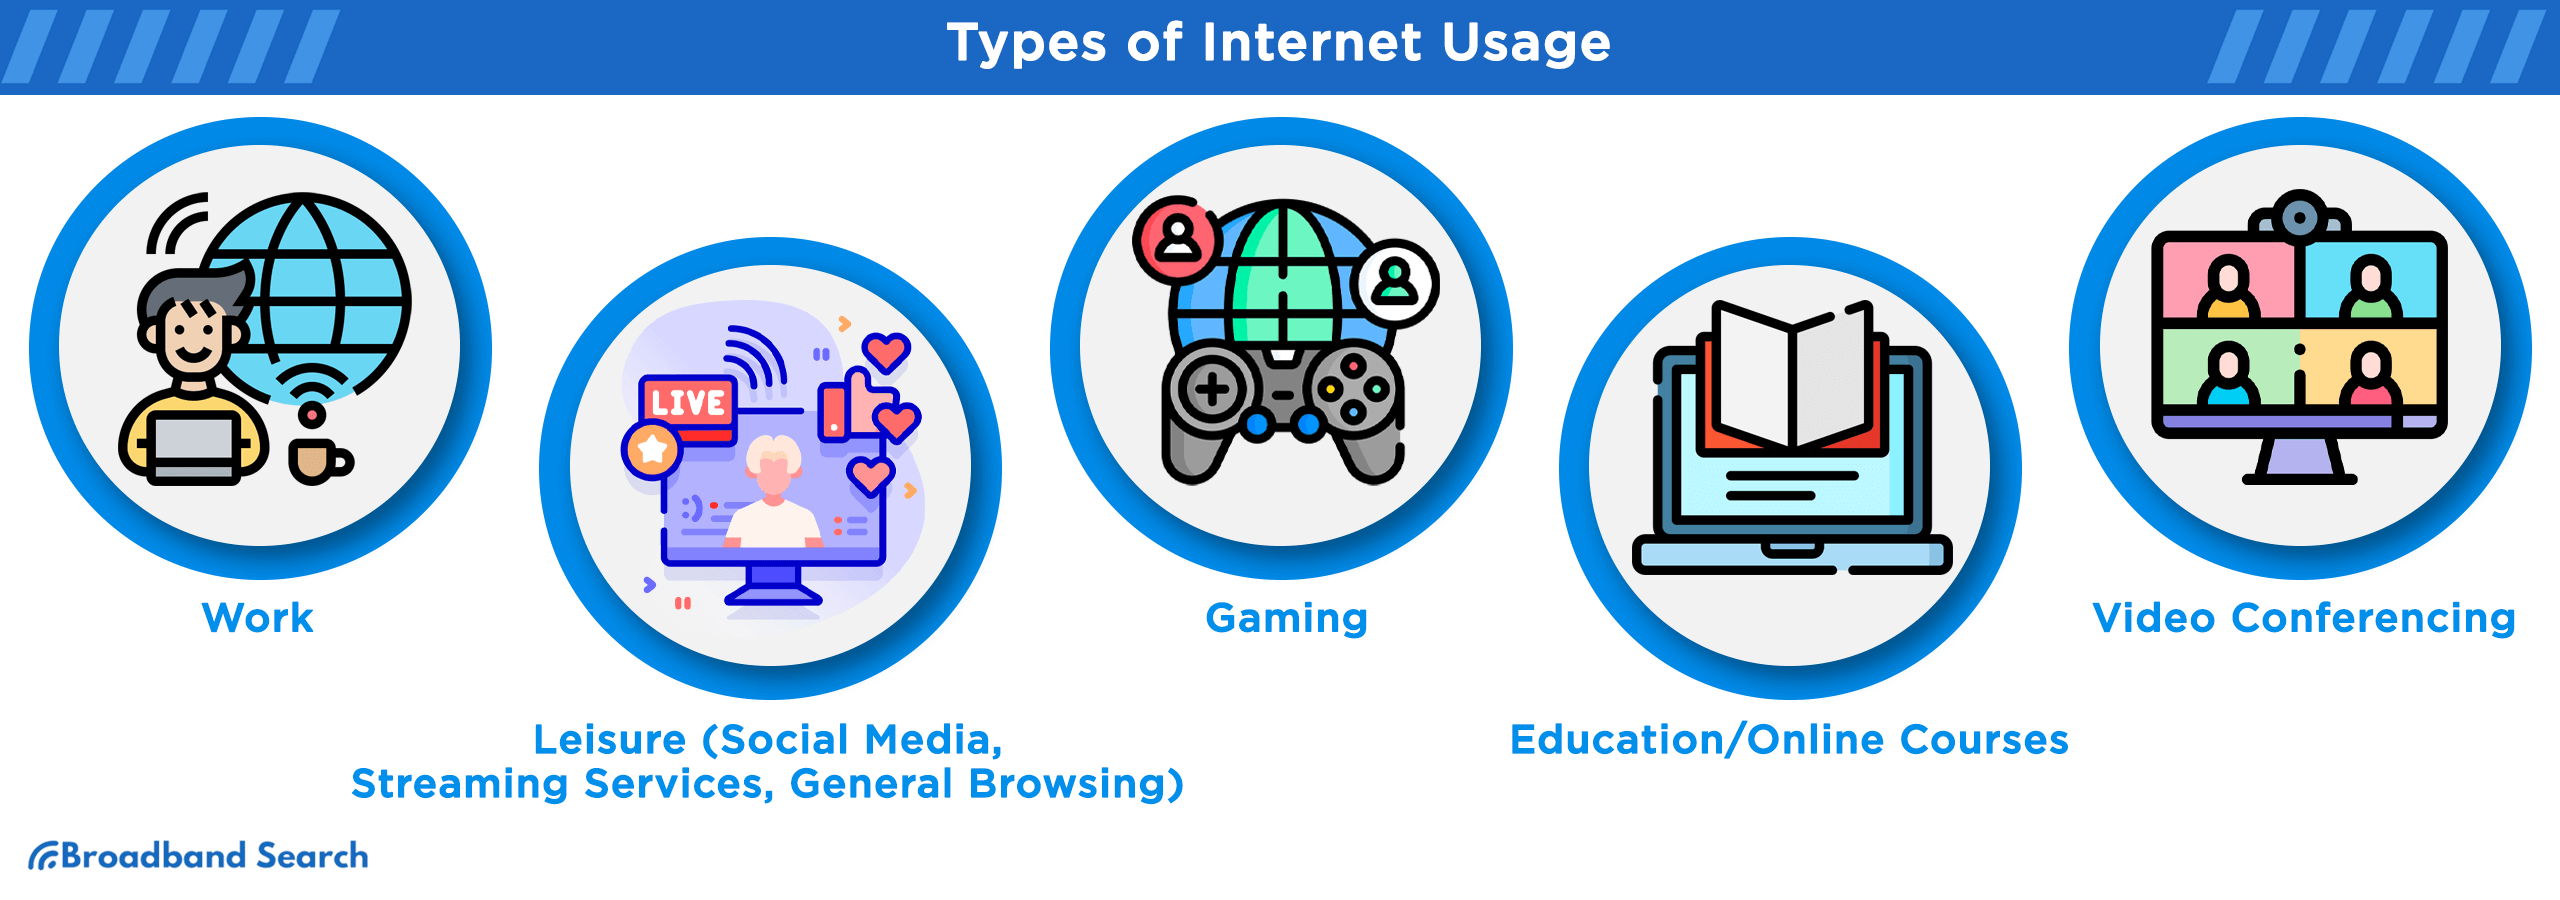 Types of Internet Usage